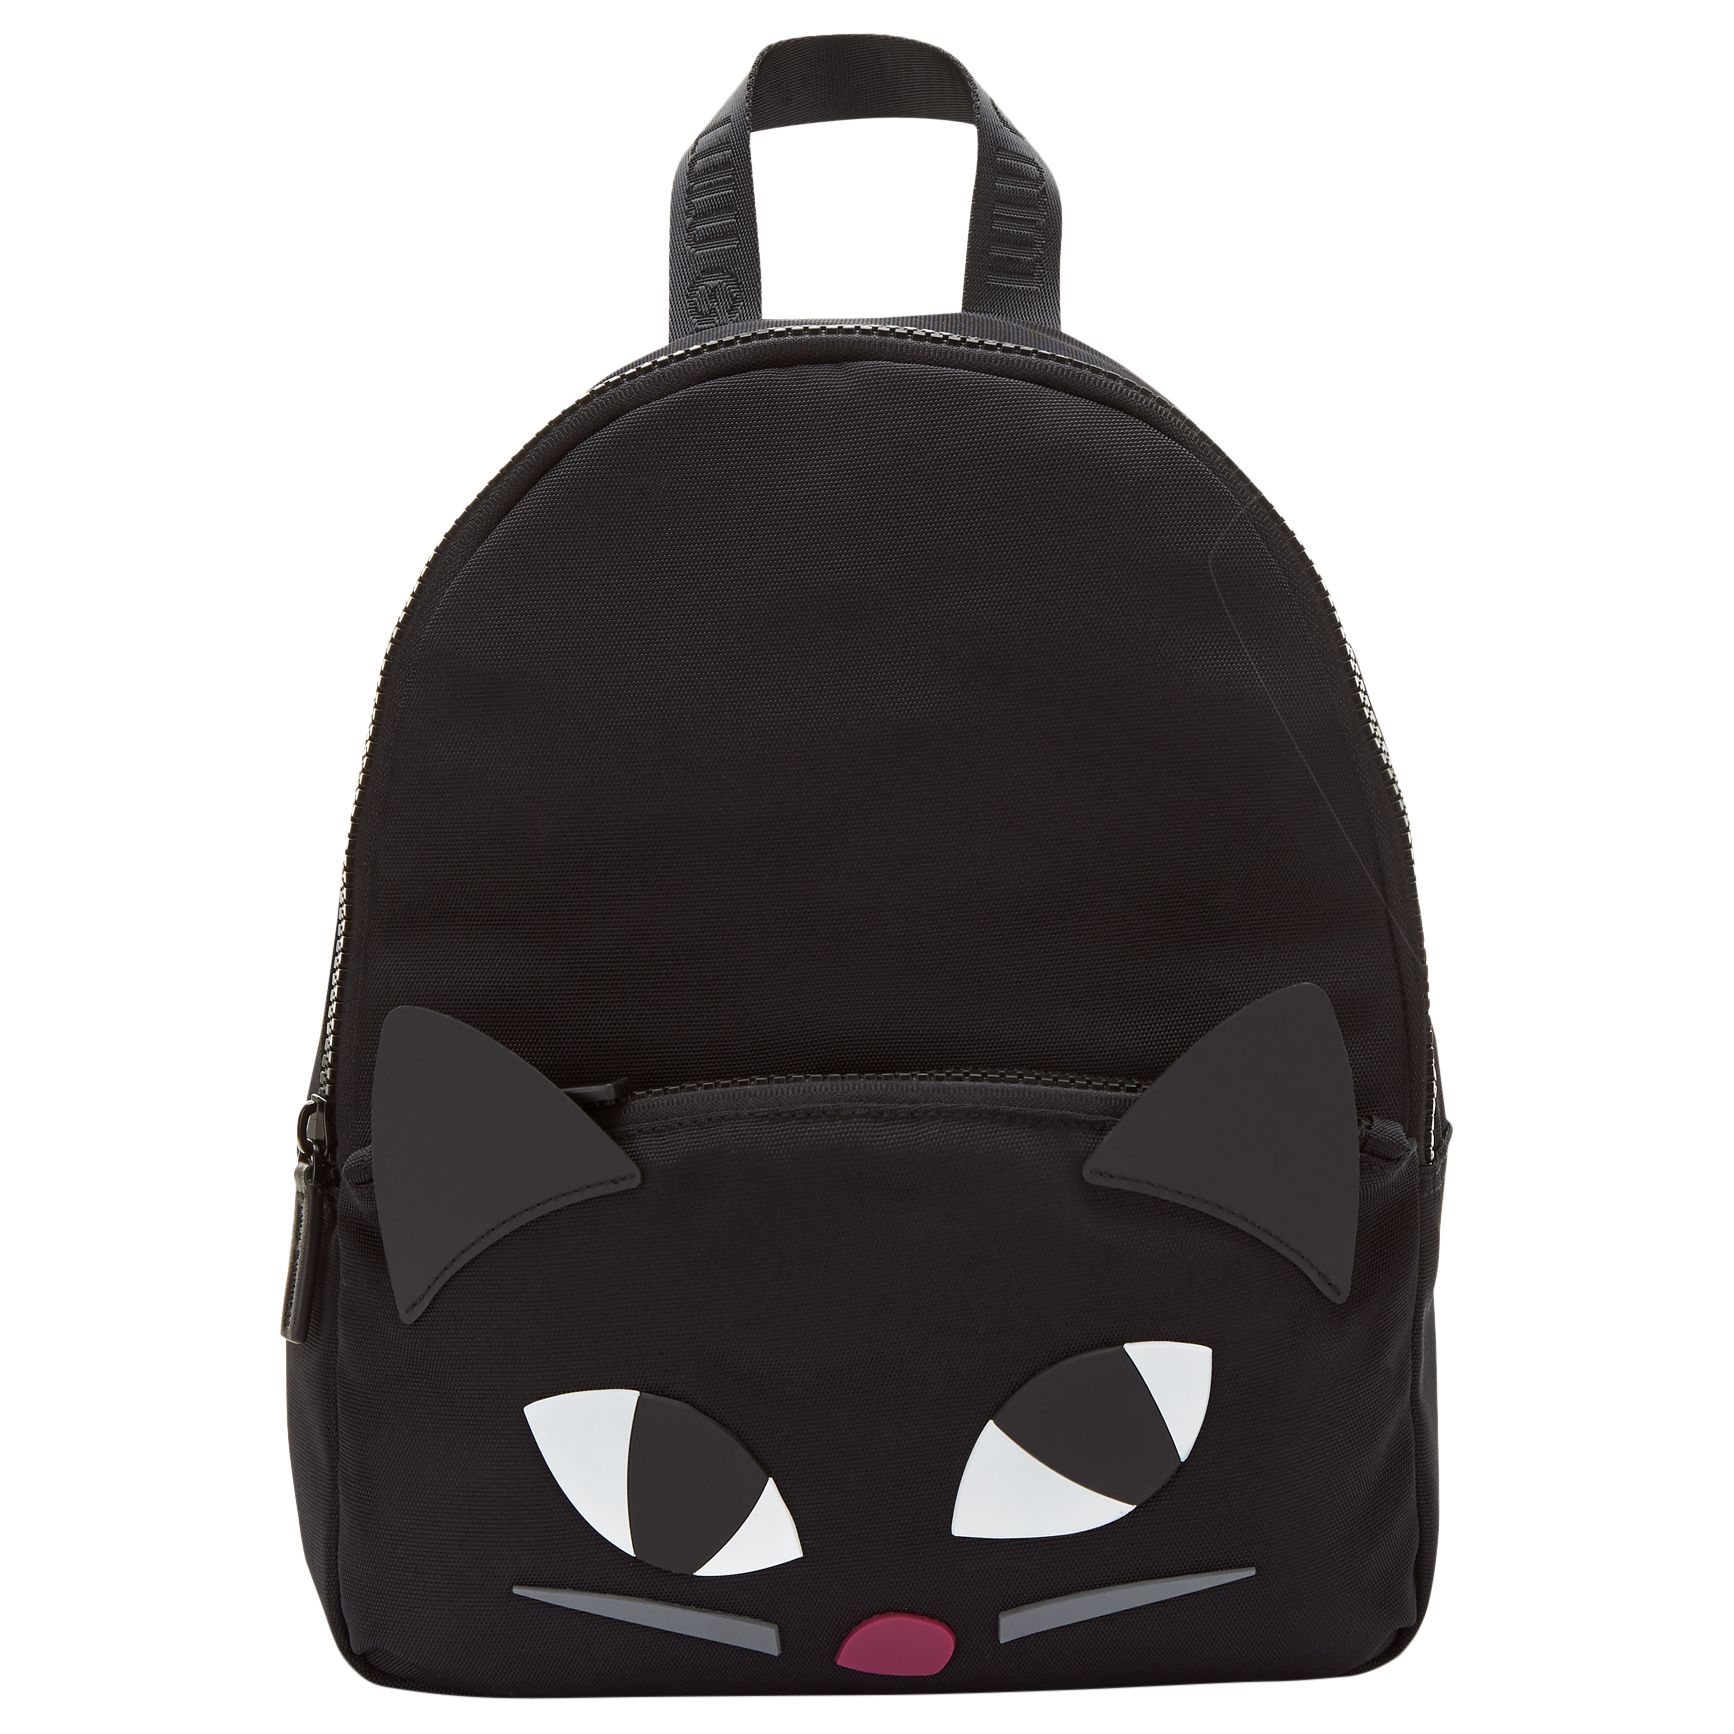 Lulu Guinness Kooky Cat Medium Backpack, Black at John Lewis & Partners